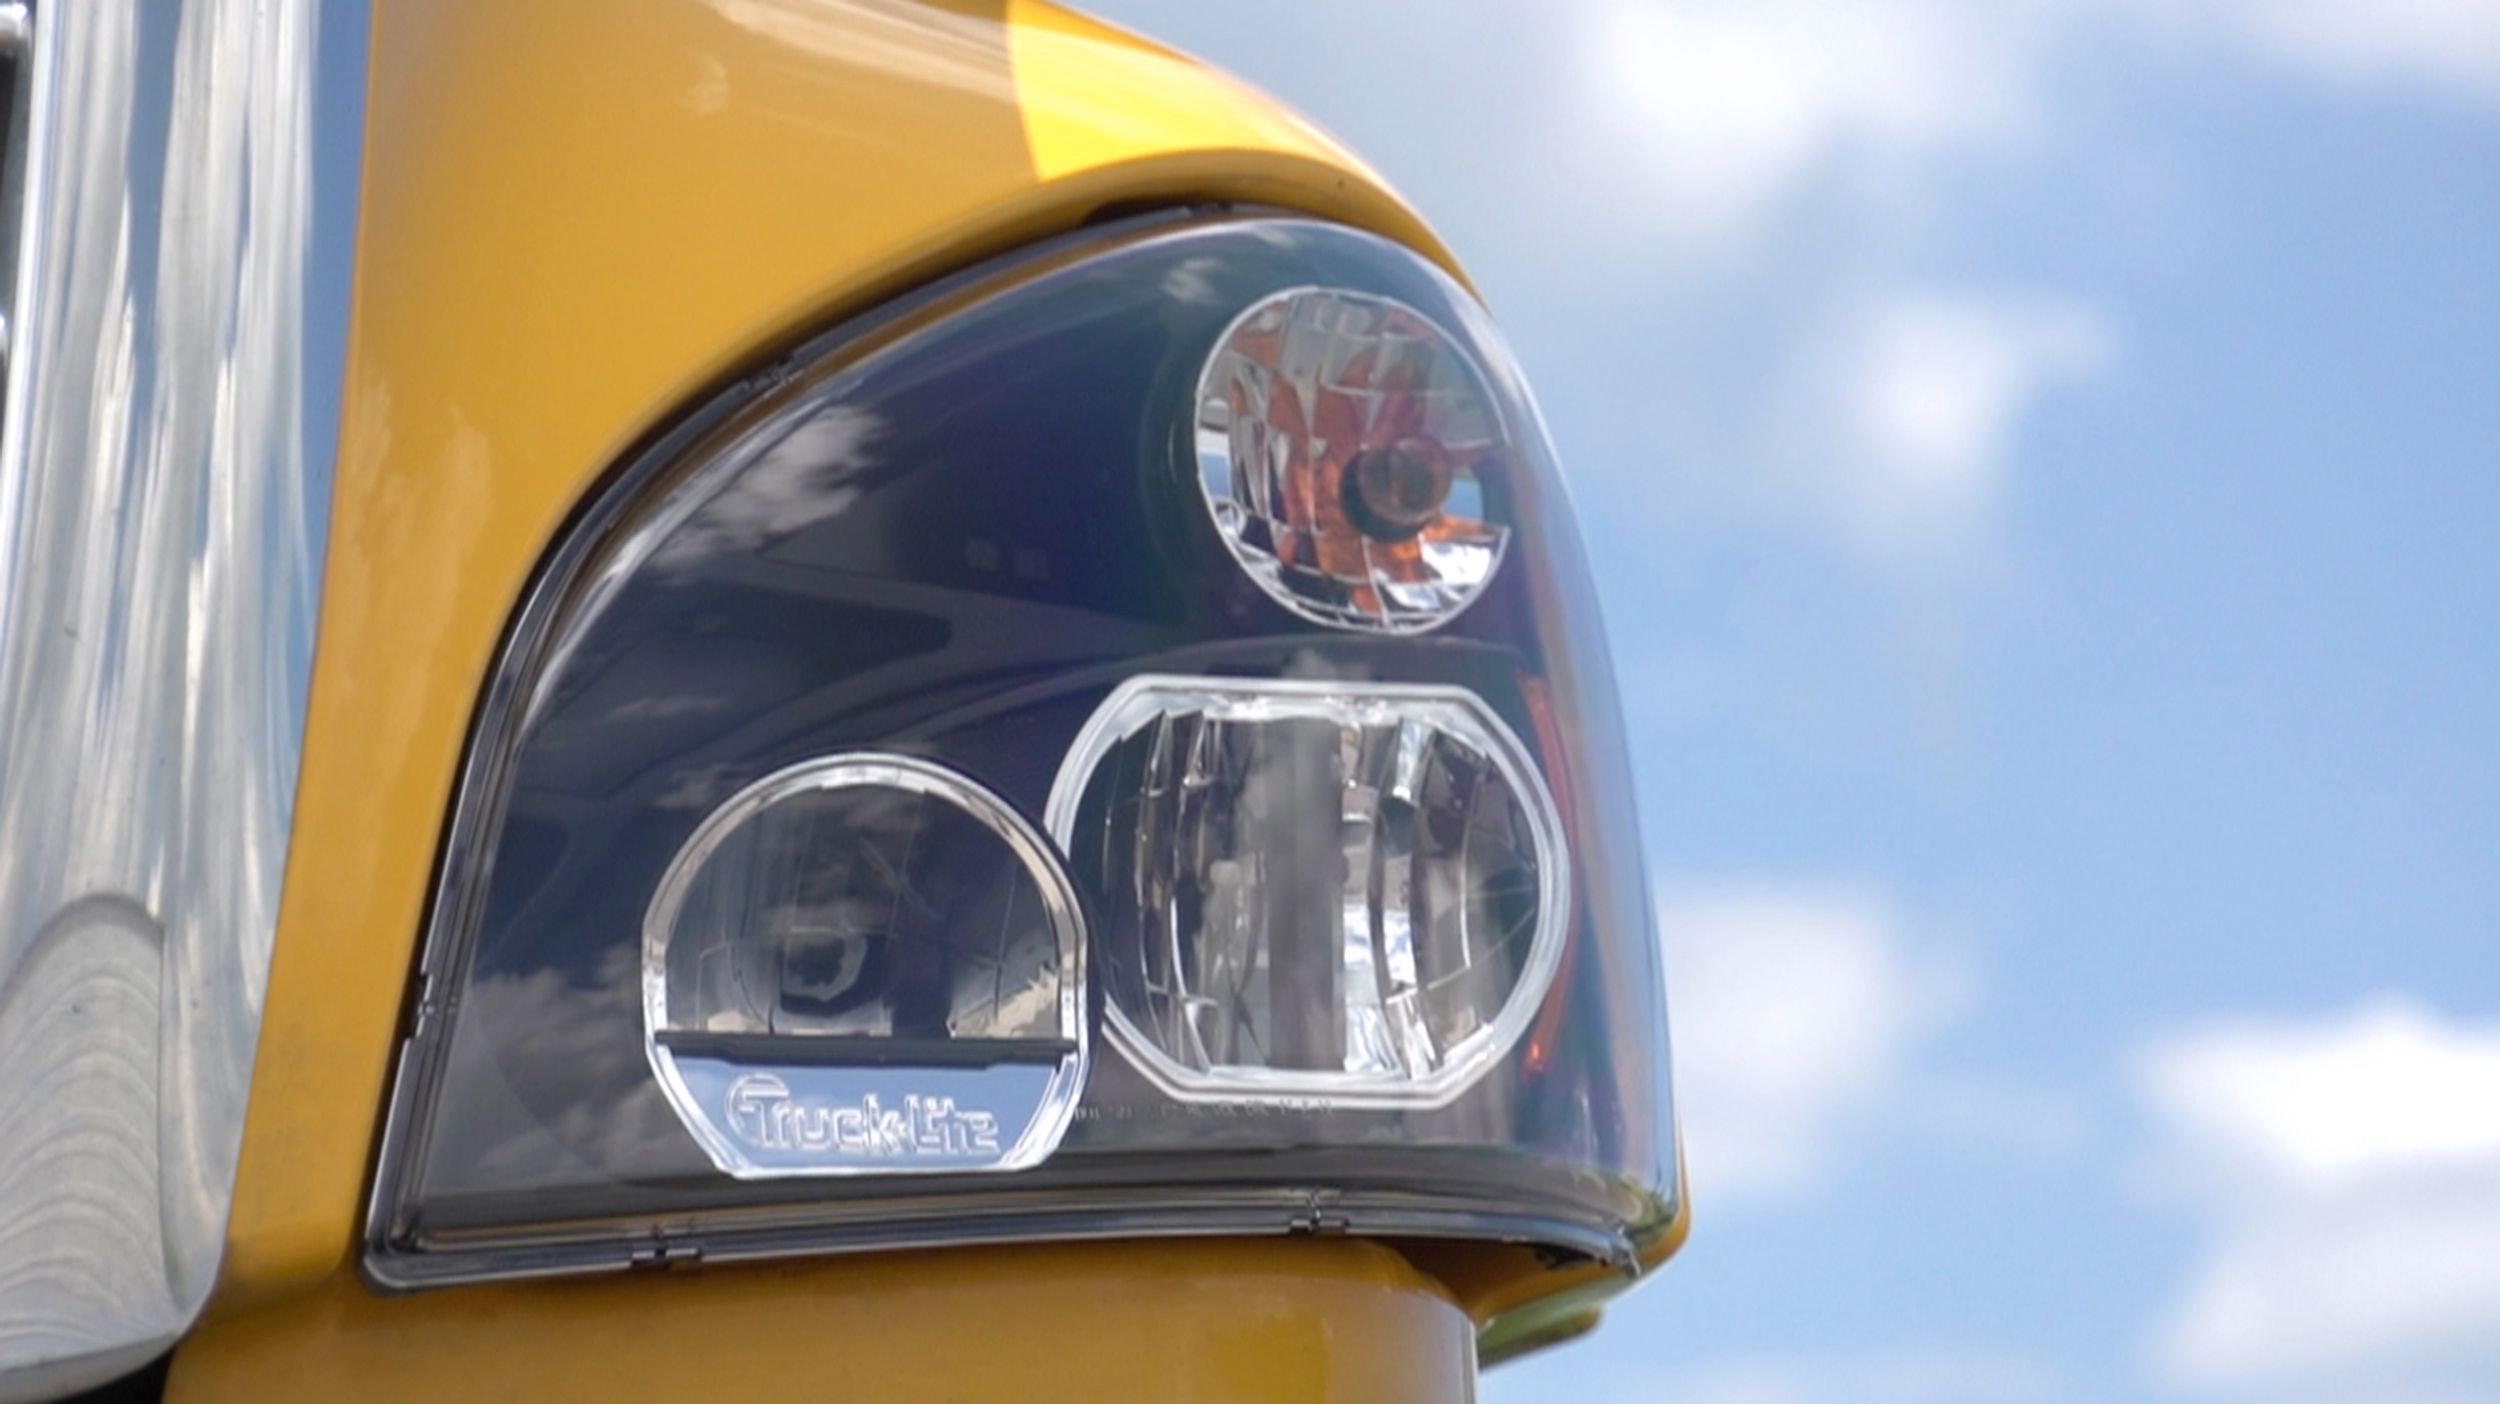 Penske Installing Truck-Lite LED headlights on 5,000 Rental Semi-Trucks